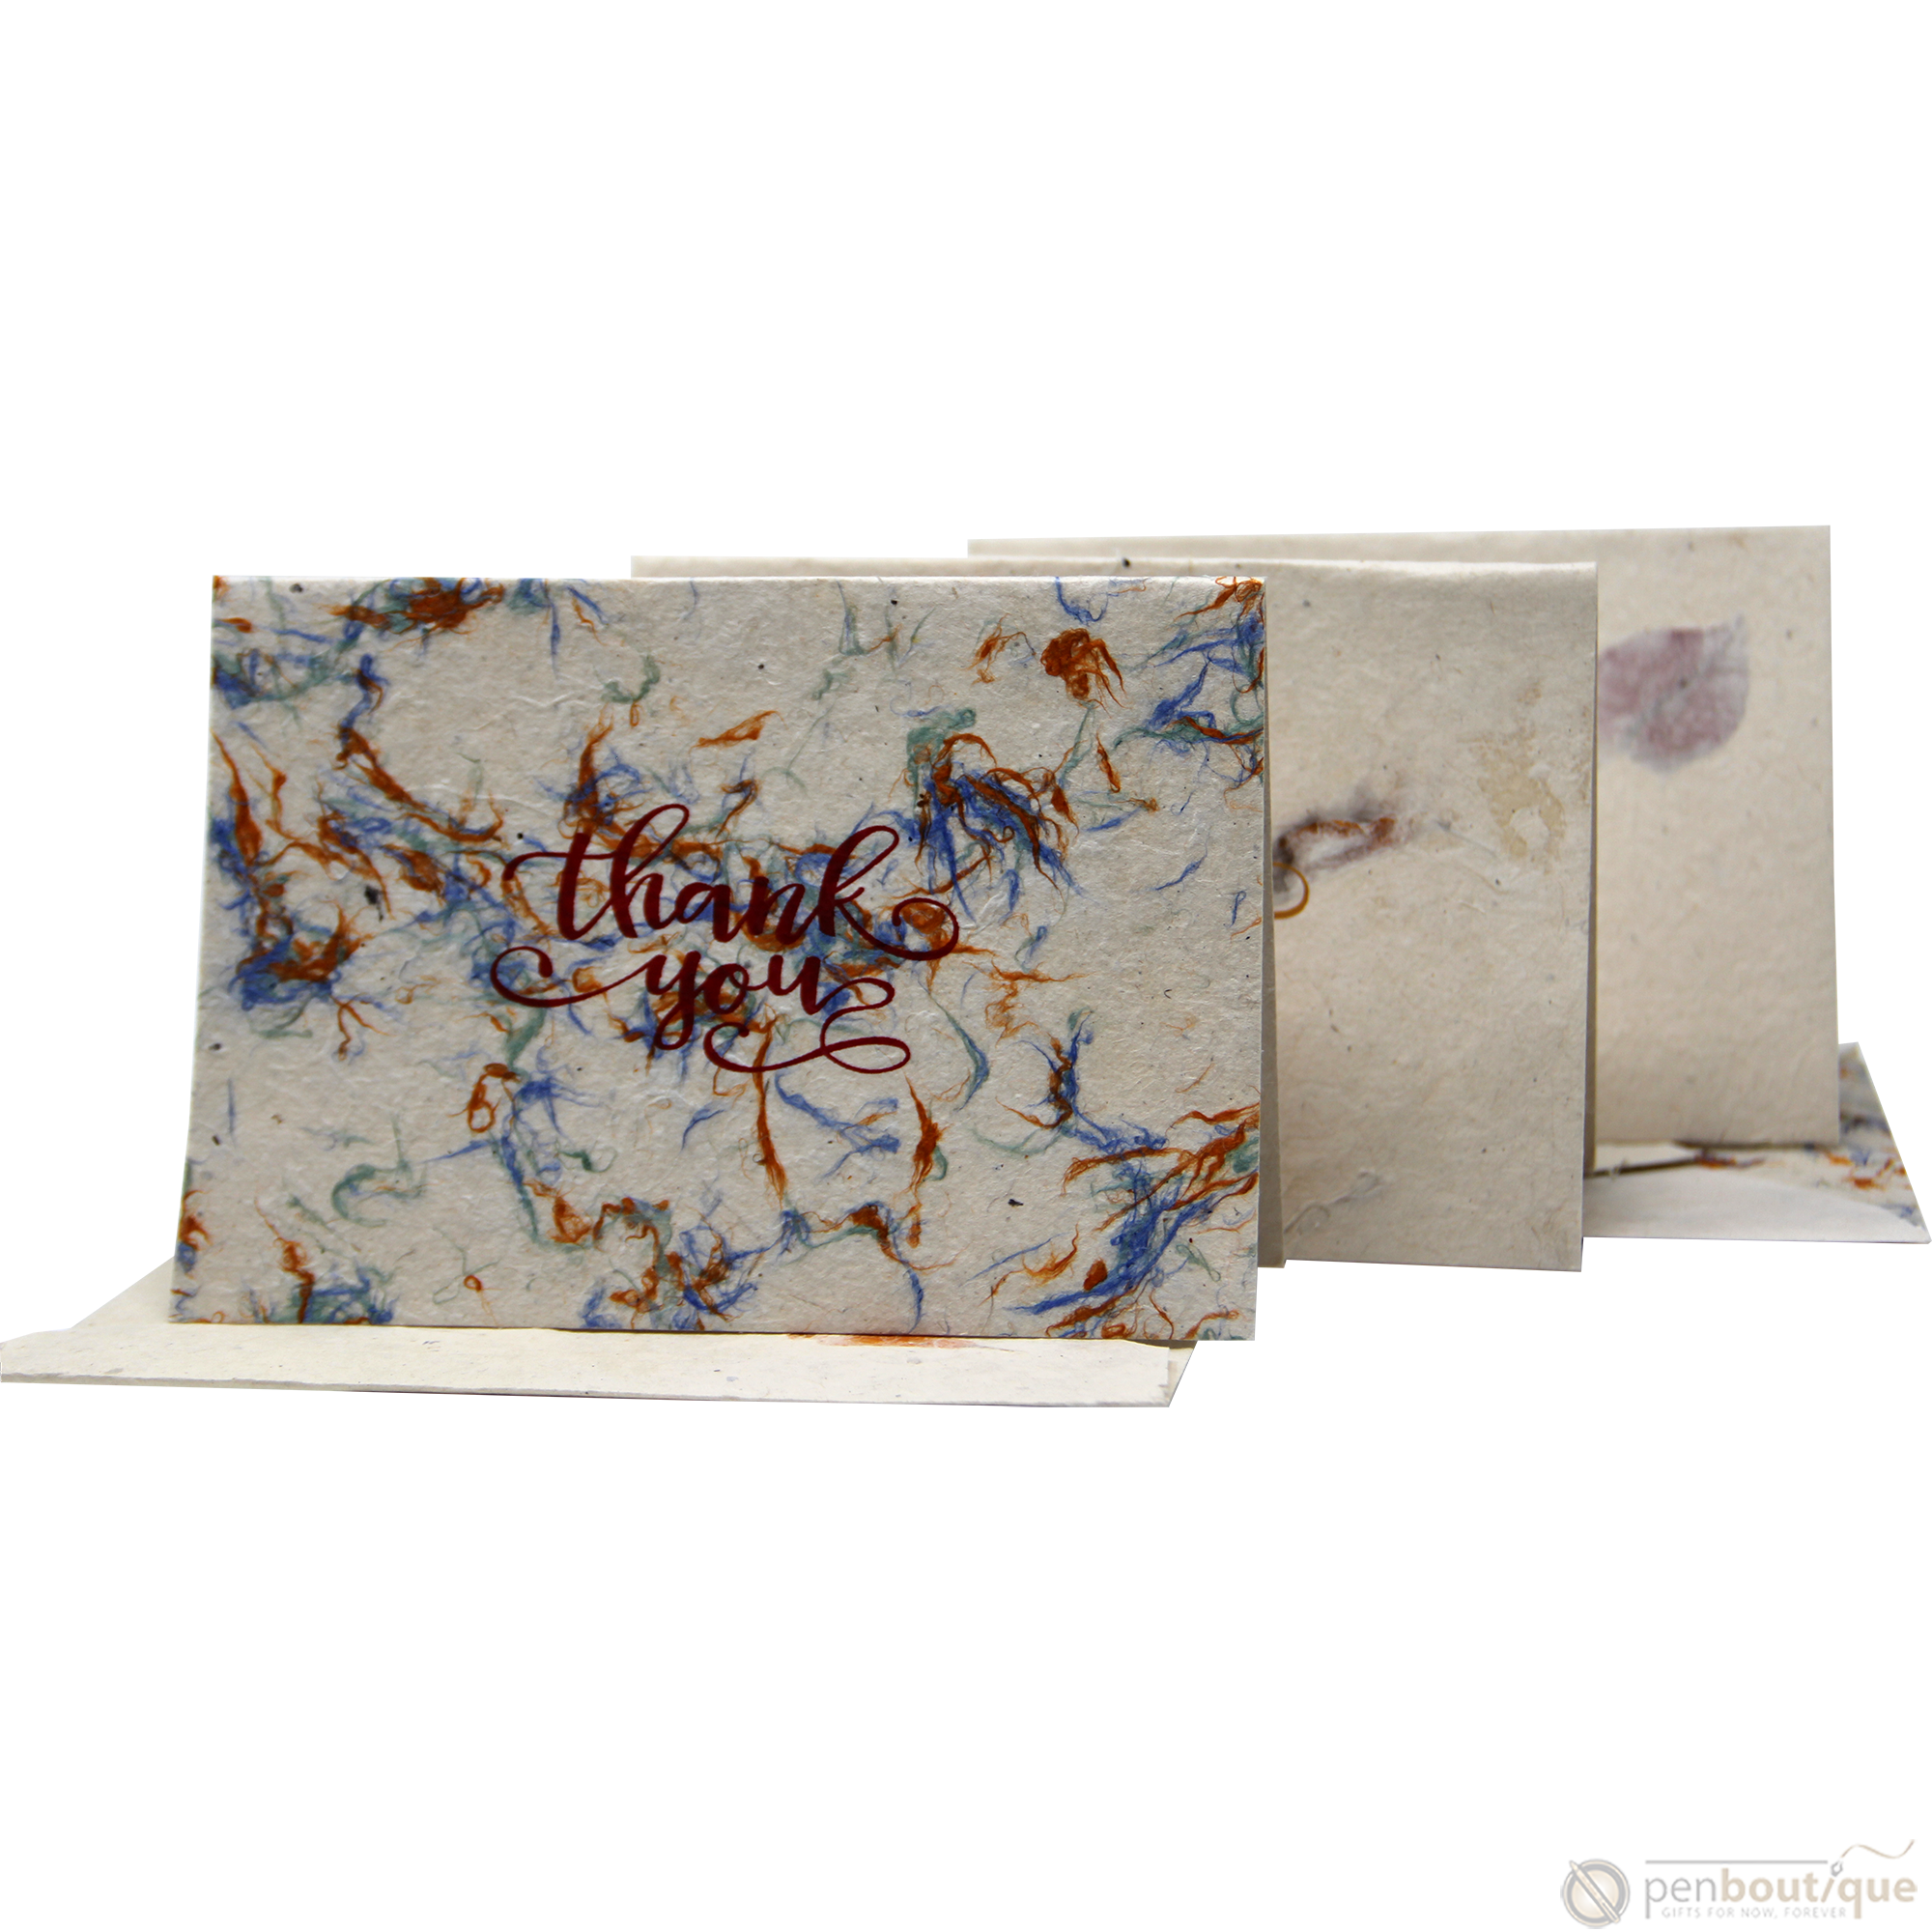 Monk Paper Thank You Note with Hemp design Envelope - pack of 12-Pen Boutique Ltd